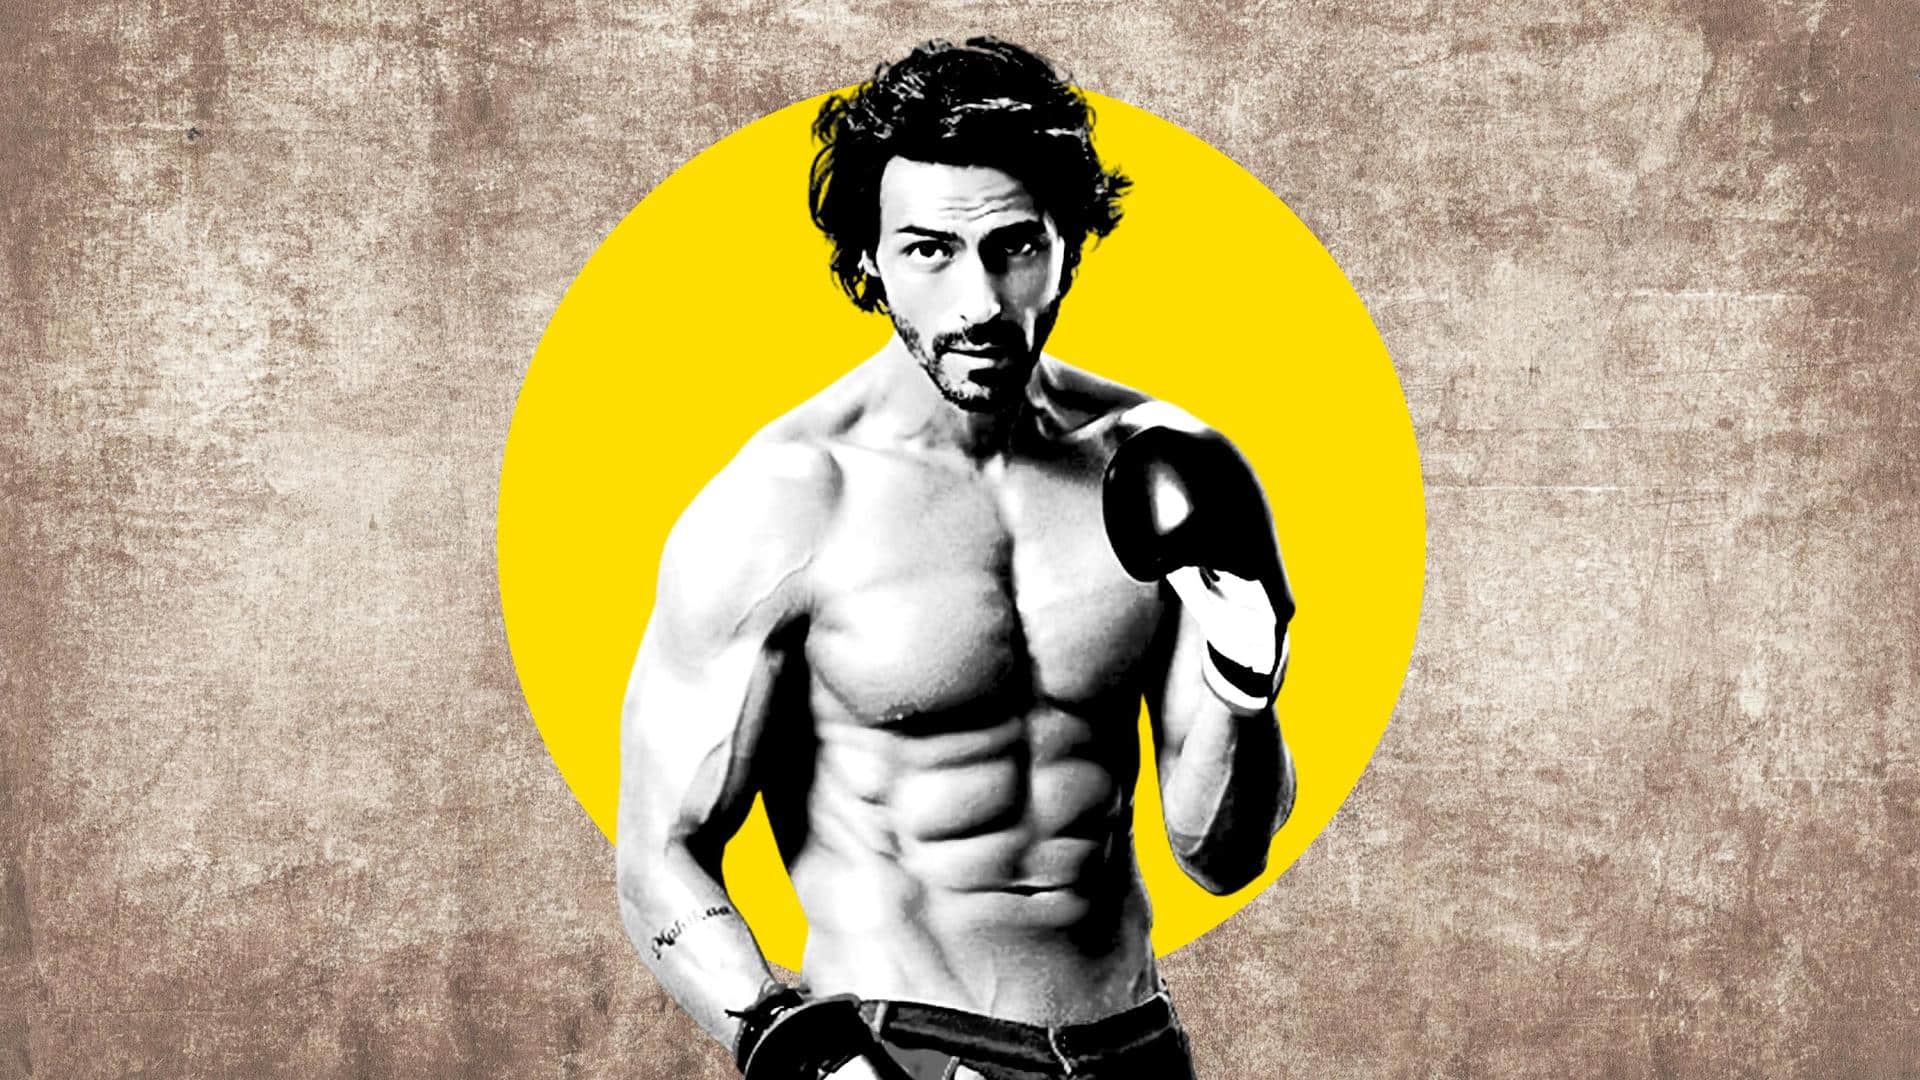 Happy birthday, Arjun Rampal! Here are the hunk's fitness secrets